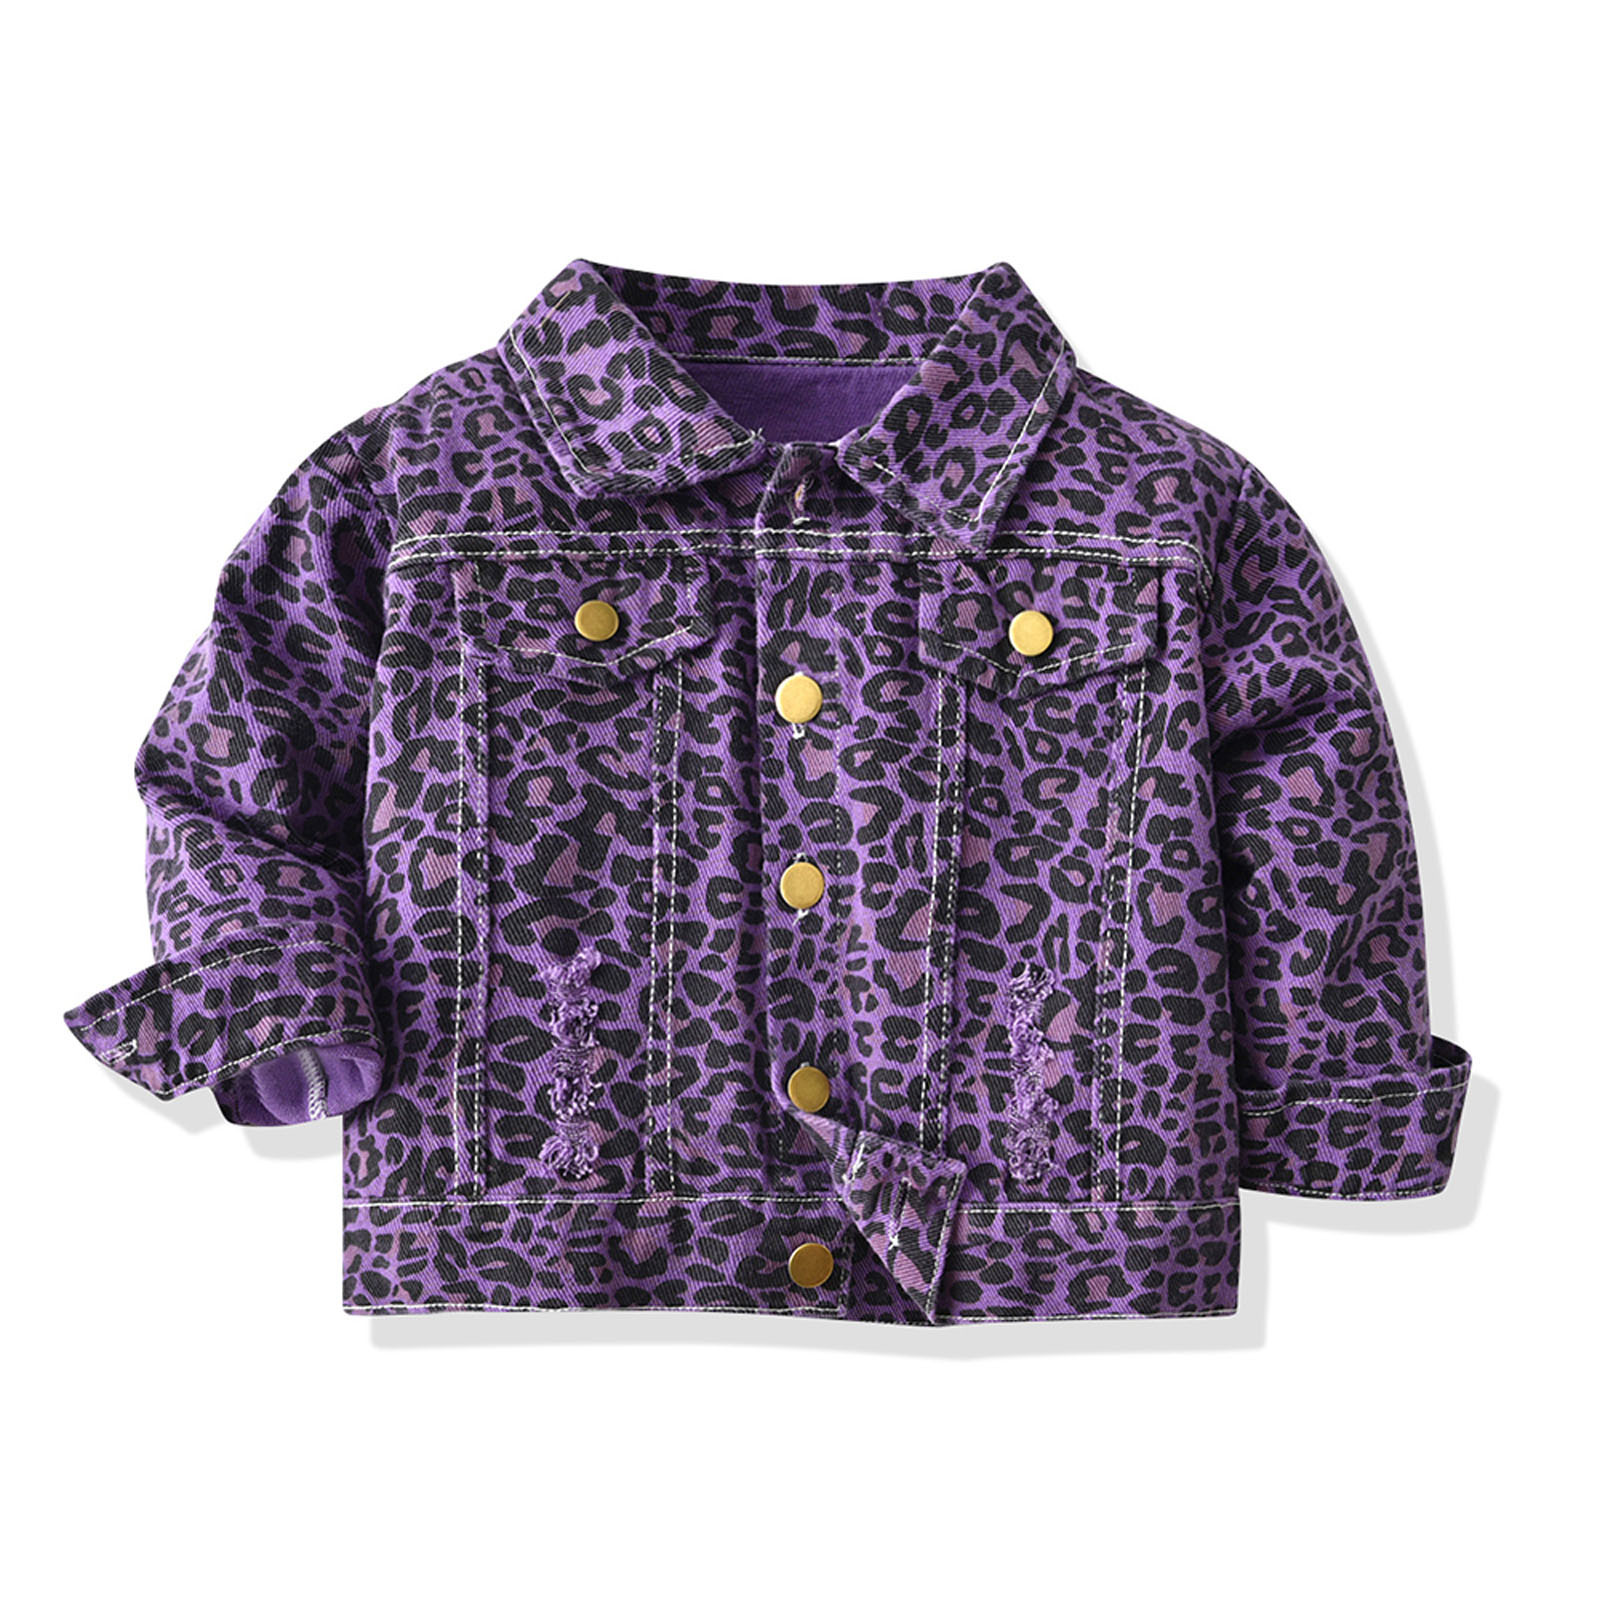 Dadaria Toddler Jacket 3Months-6Years Fashion Kids Coat Boys Girls Thick Coat Denim Print Jacket Clothes Children's Jacket Purple 5-6 Years,Toddler - image 2 of 9